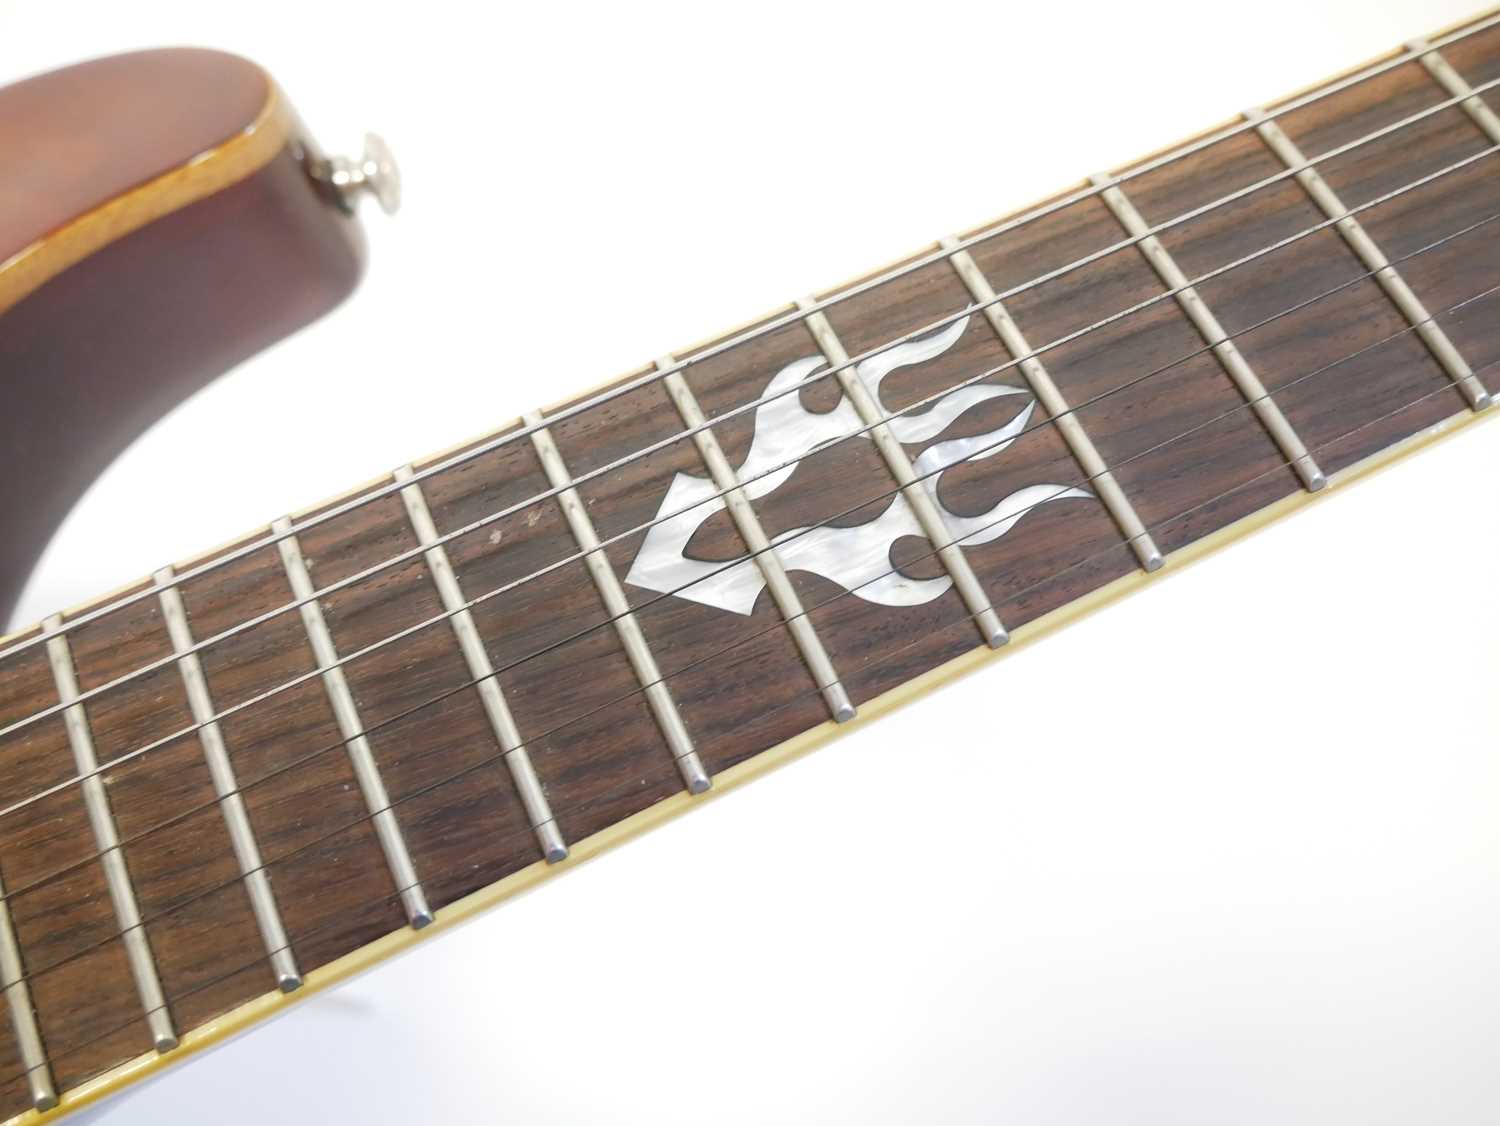 Ibanez SZ520 Electric Guitar - Image 3 of 11